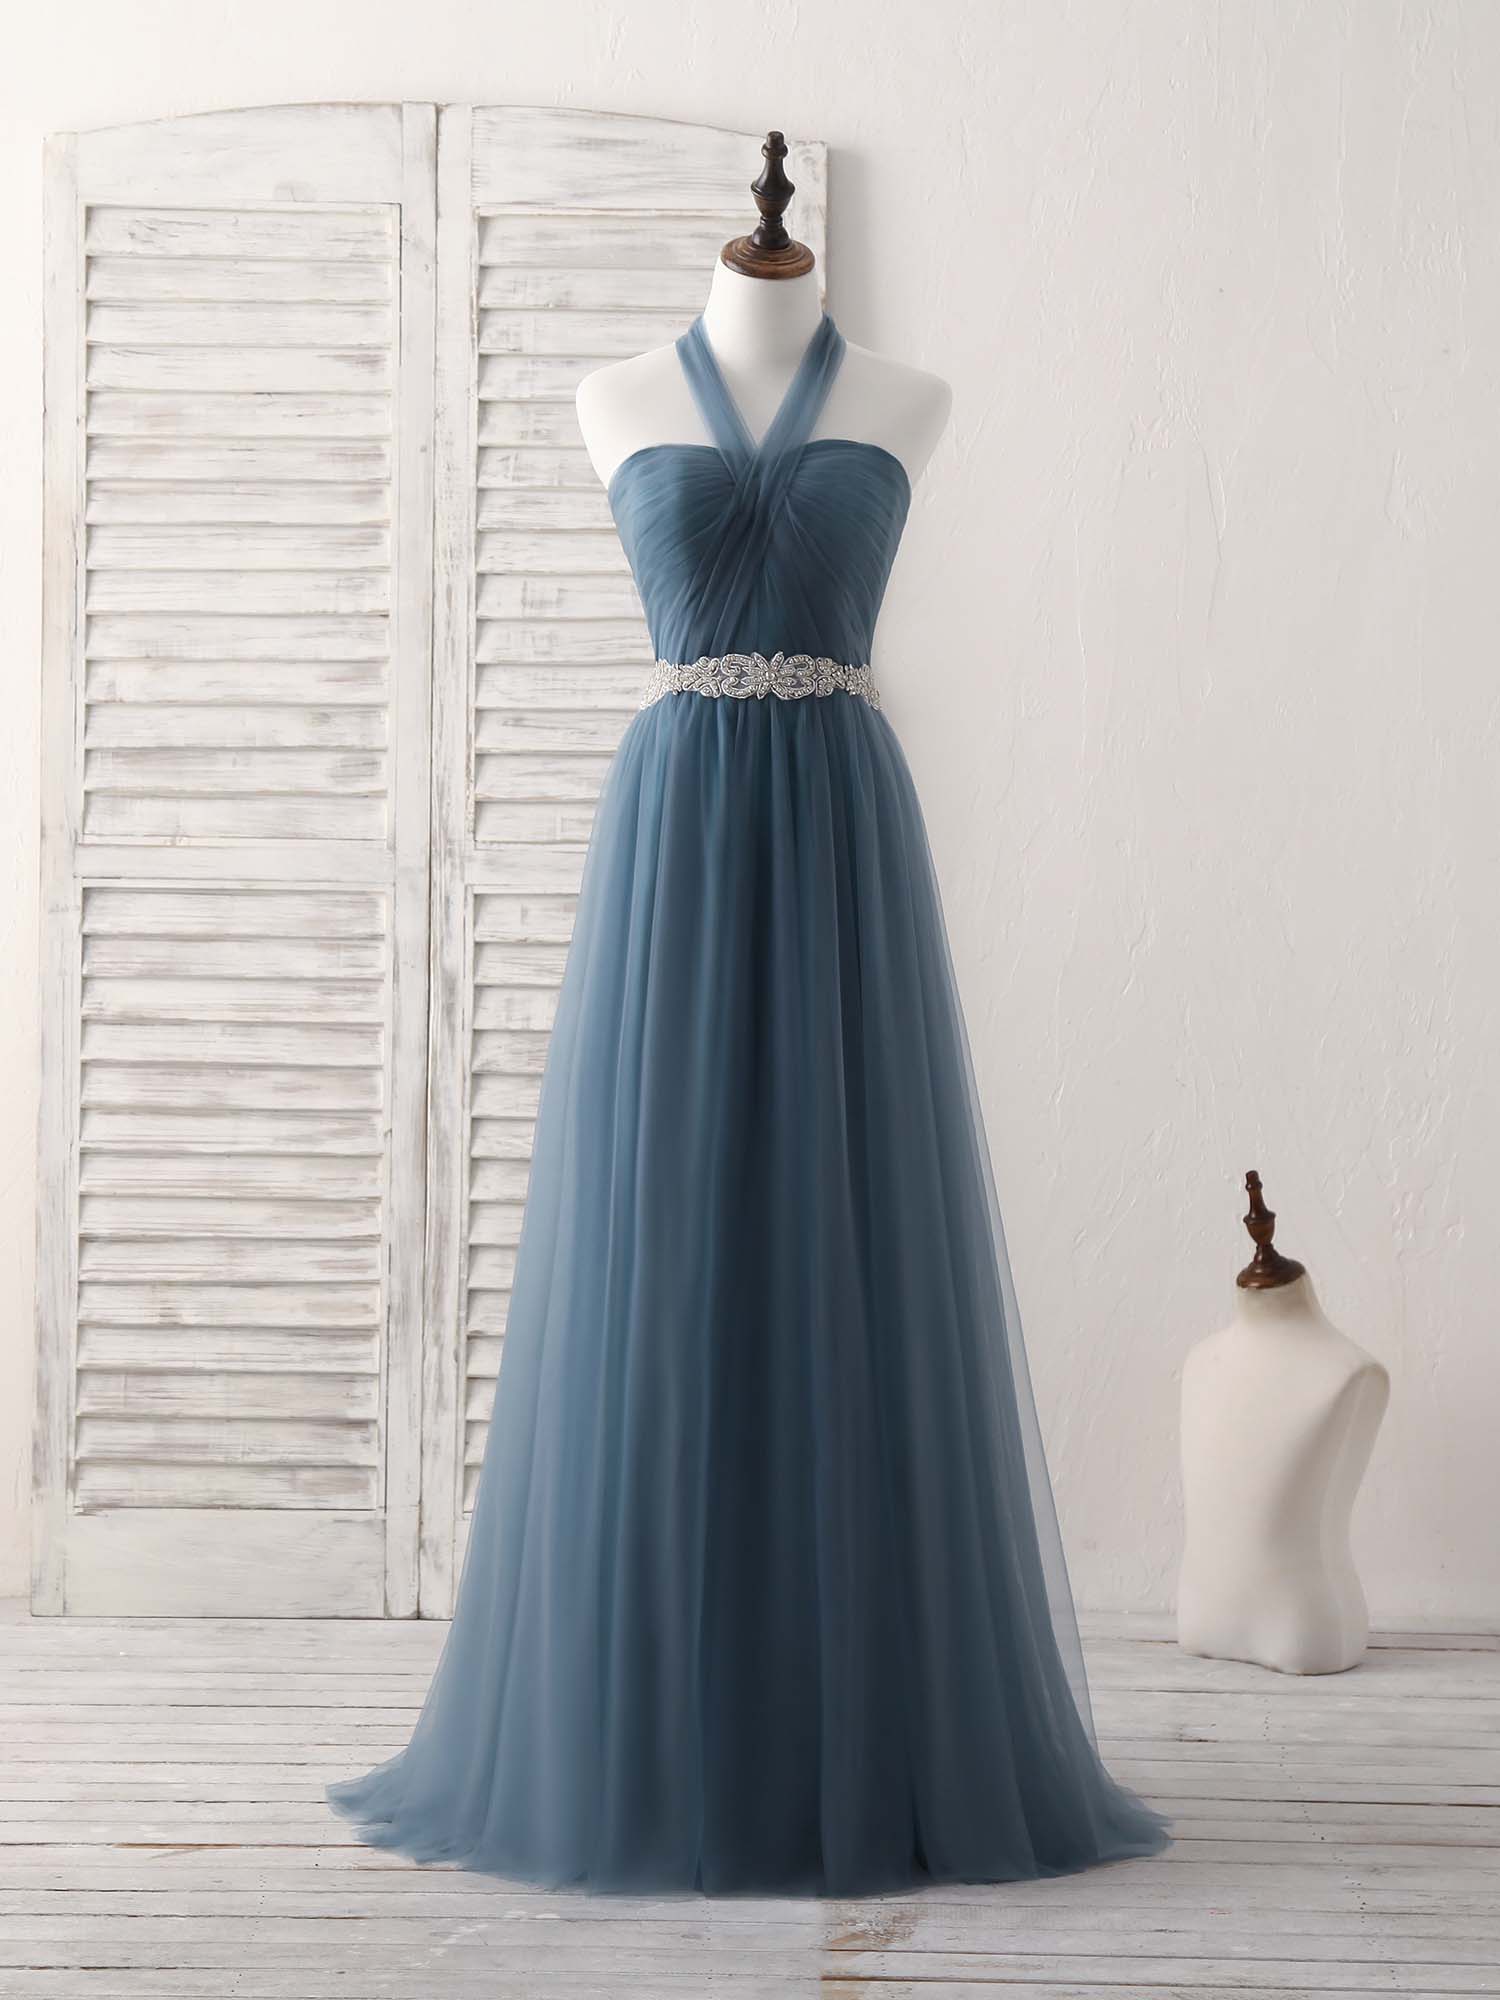 Party Dresses Mini, A-Line Gray Blue Tulle Long Bridesmaid Dress Gray Blue Prom Dress